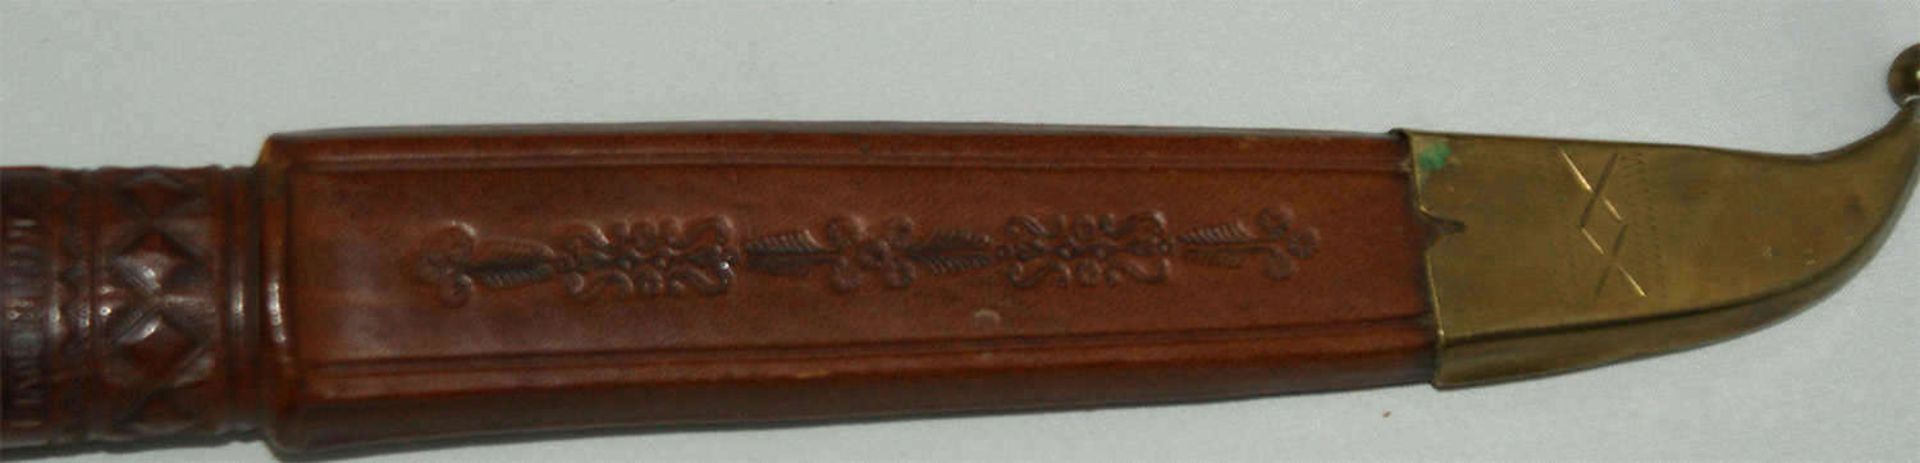 Fa. JisaRR Järvenpää Finnland, Jagdmesser mit Pferdekopf im Original Lederetui. Gesamtlänge 27 cm, - Image 3 of 5